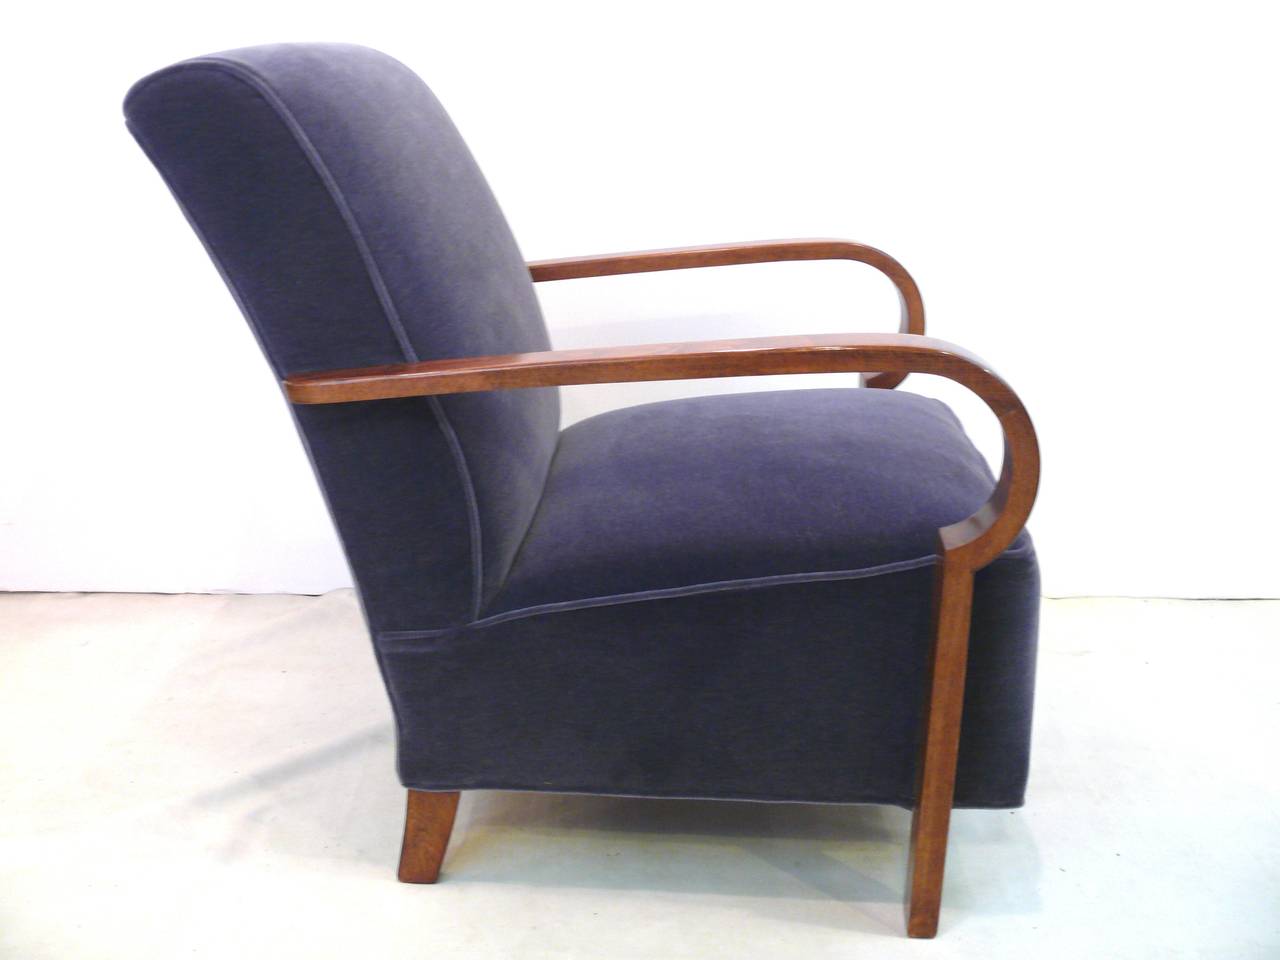 Welsh Pair of Swedish Art Deco Chairs